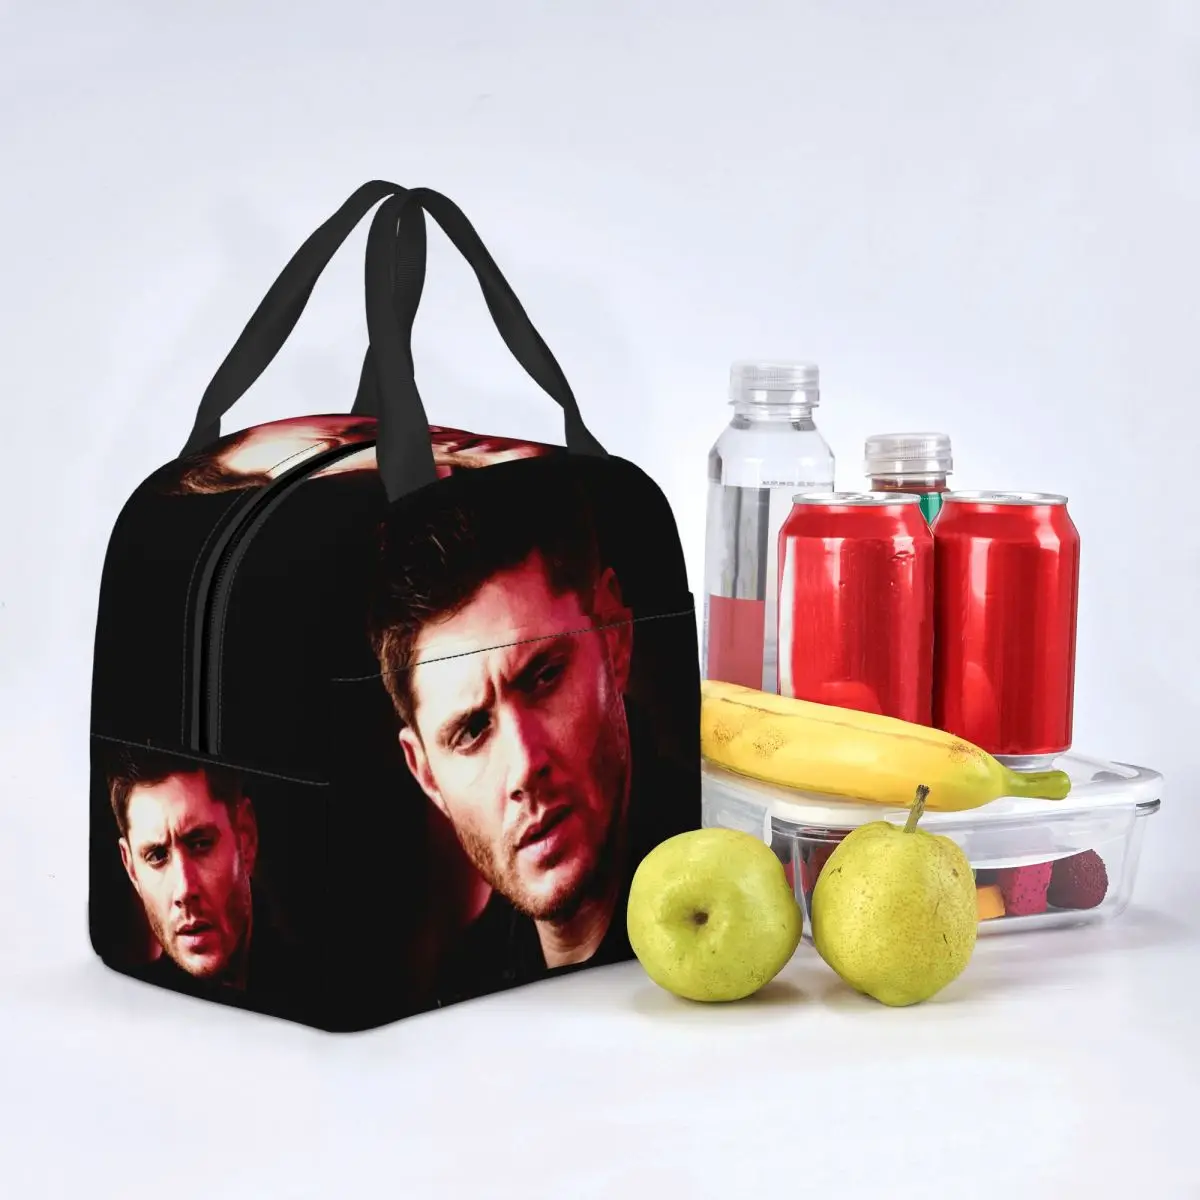 https://ae01.alicdn.com/kf/Sc1892758816348388571c69c1203b0efR/Supernatural-Dean-Winchester-Insulated-Lunch-Bag-for-Women-Portable-Thermal-Cooler-Bento-Box-School-Work-Picnic.jpg